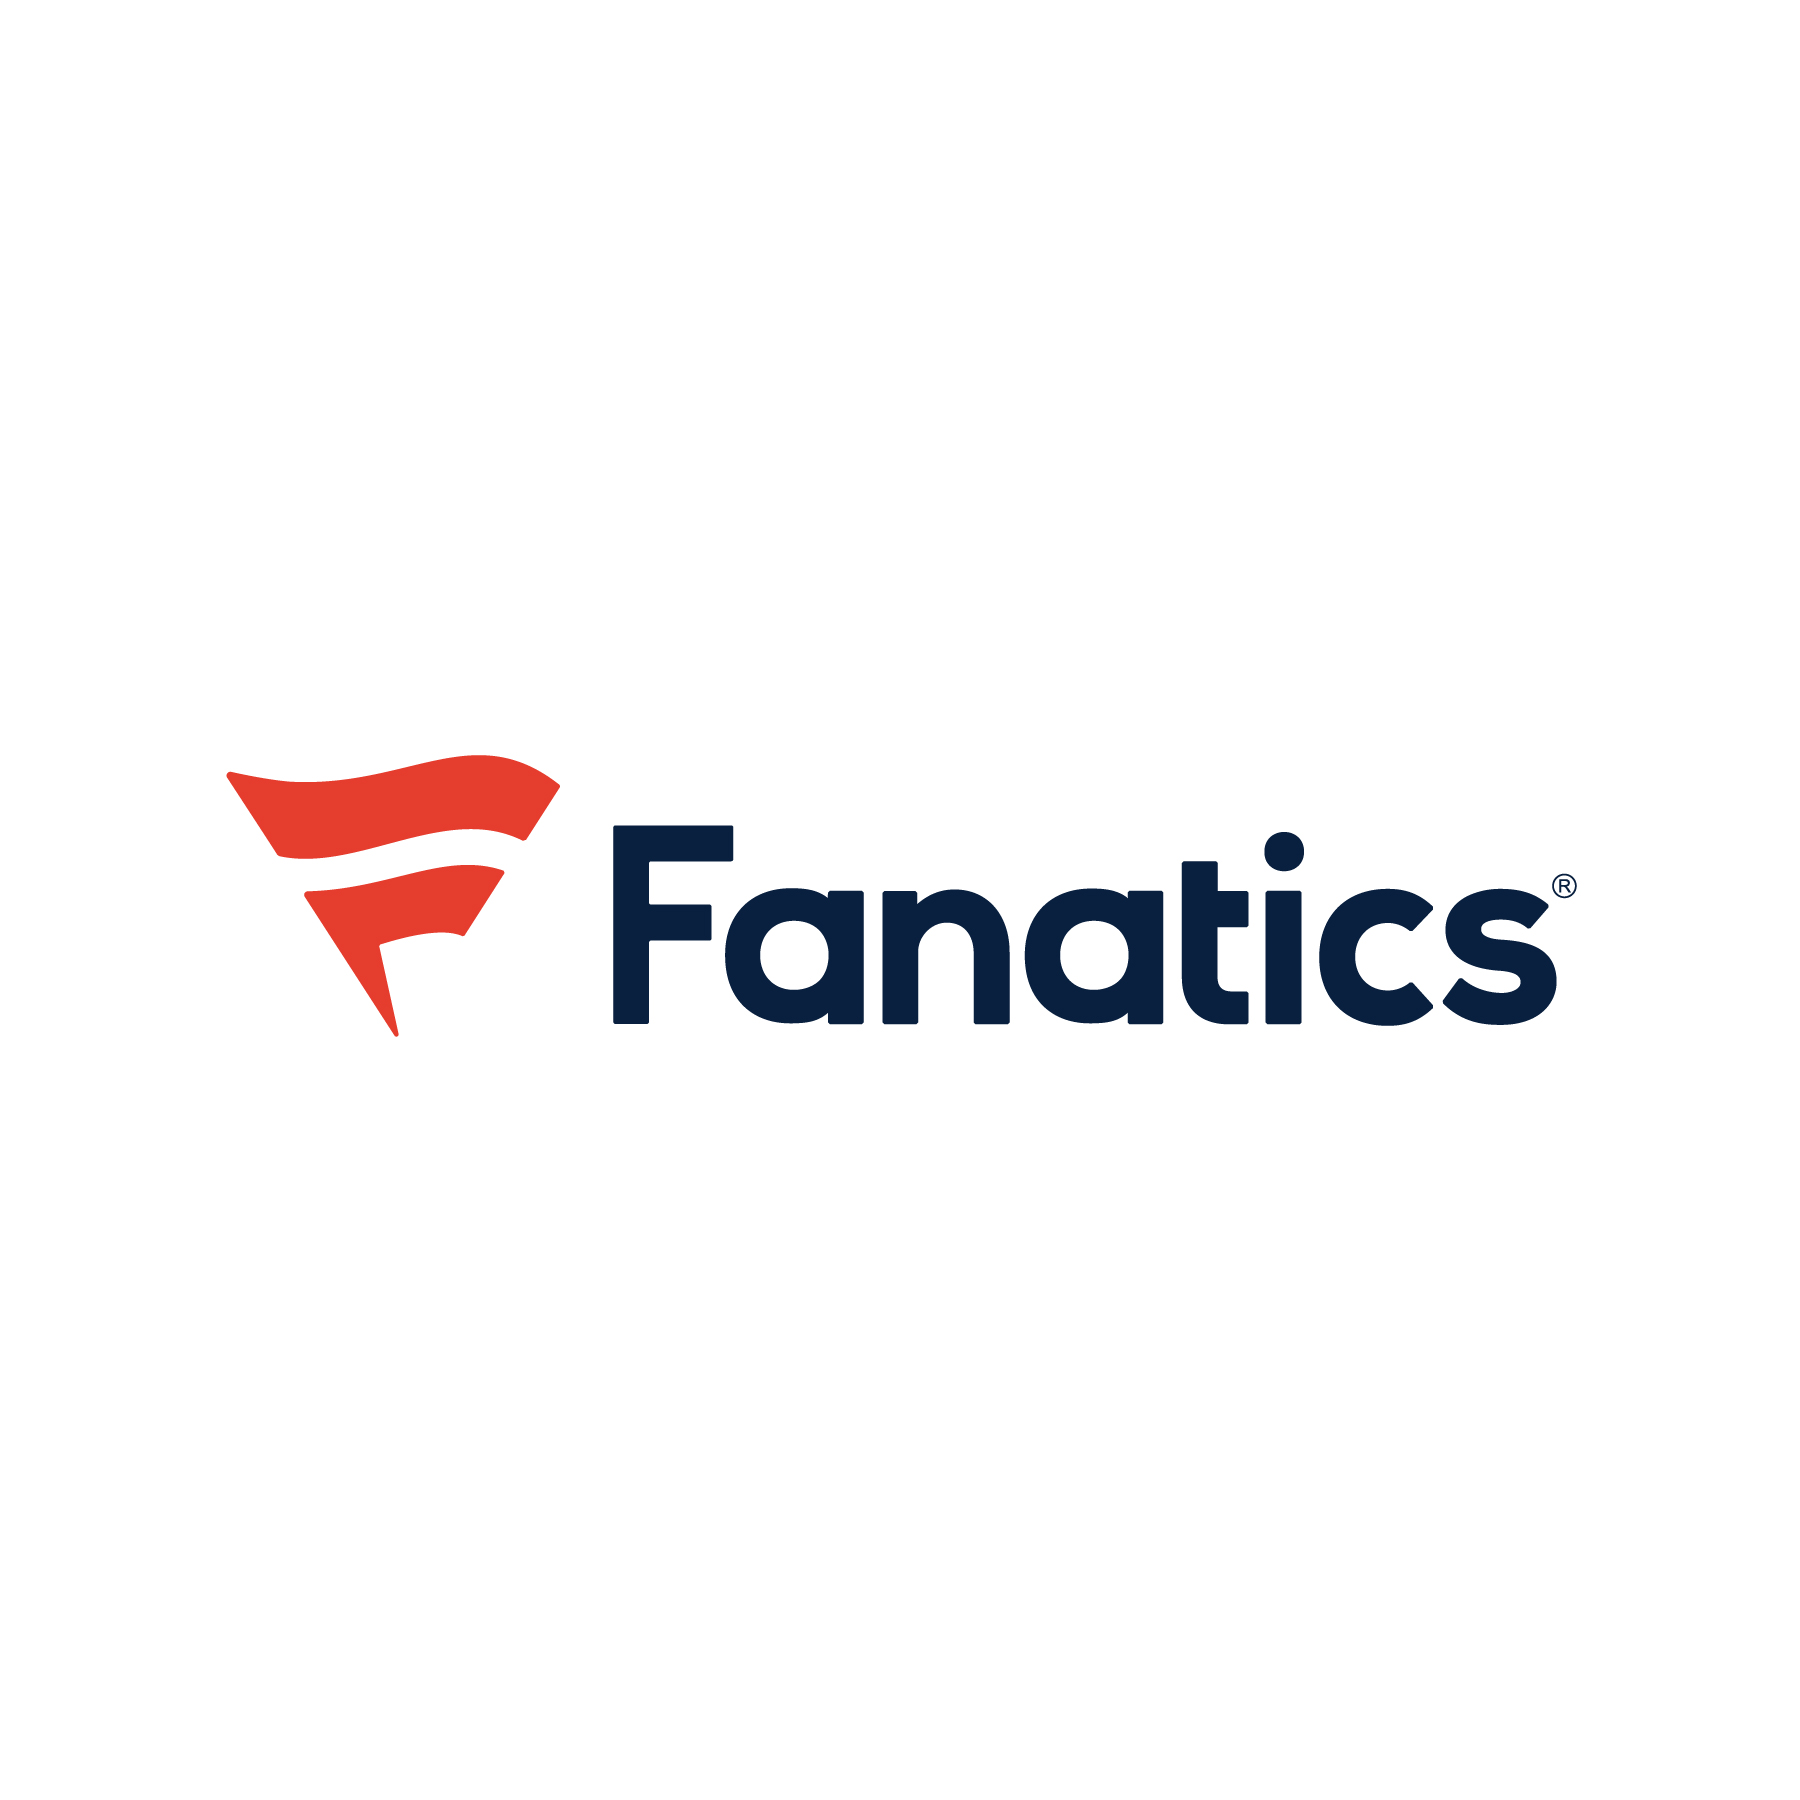 fanatics logo centered - testimonial 